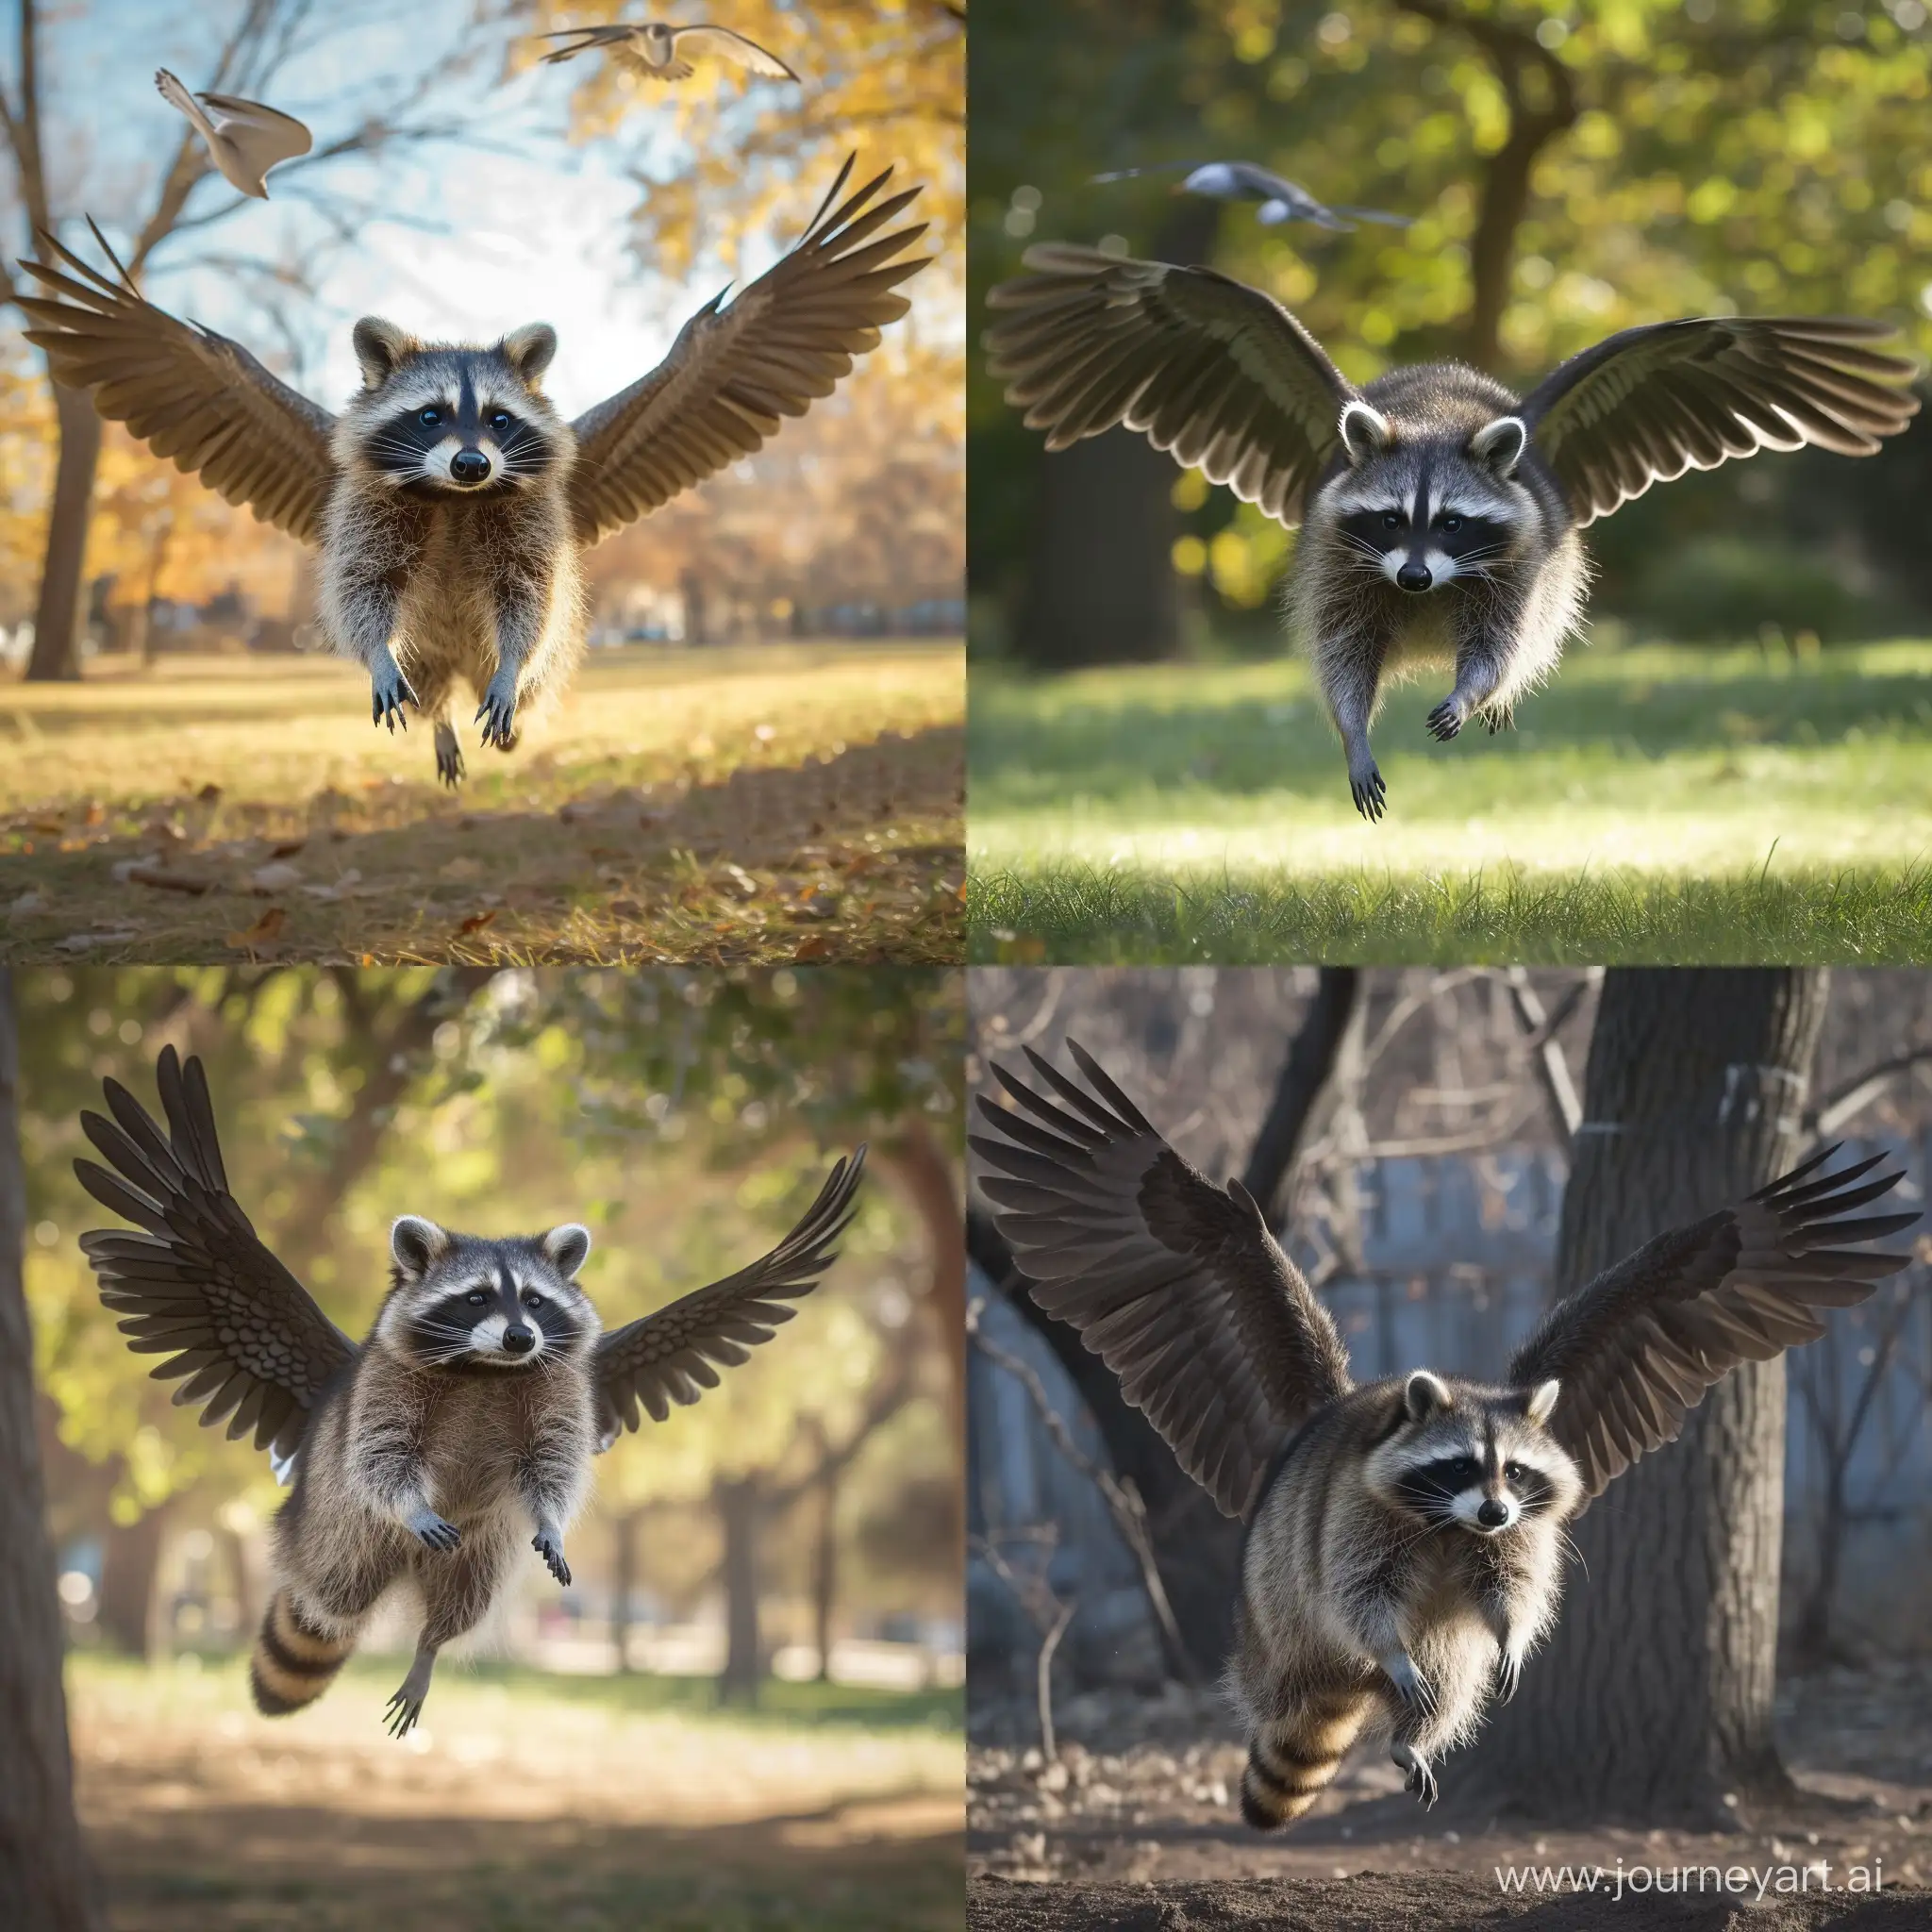 Majestic-Winged-Raccoon-Sailing-Through-Sunlit-Park-AwardWinning-Wildlife-Photography